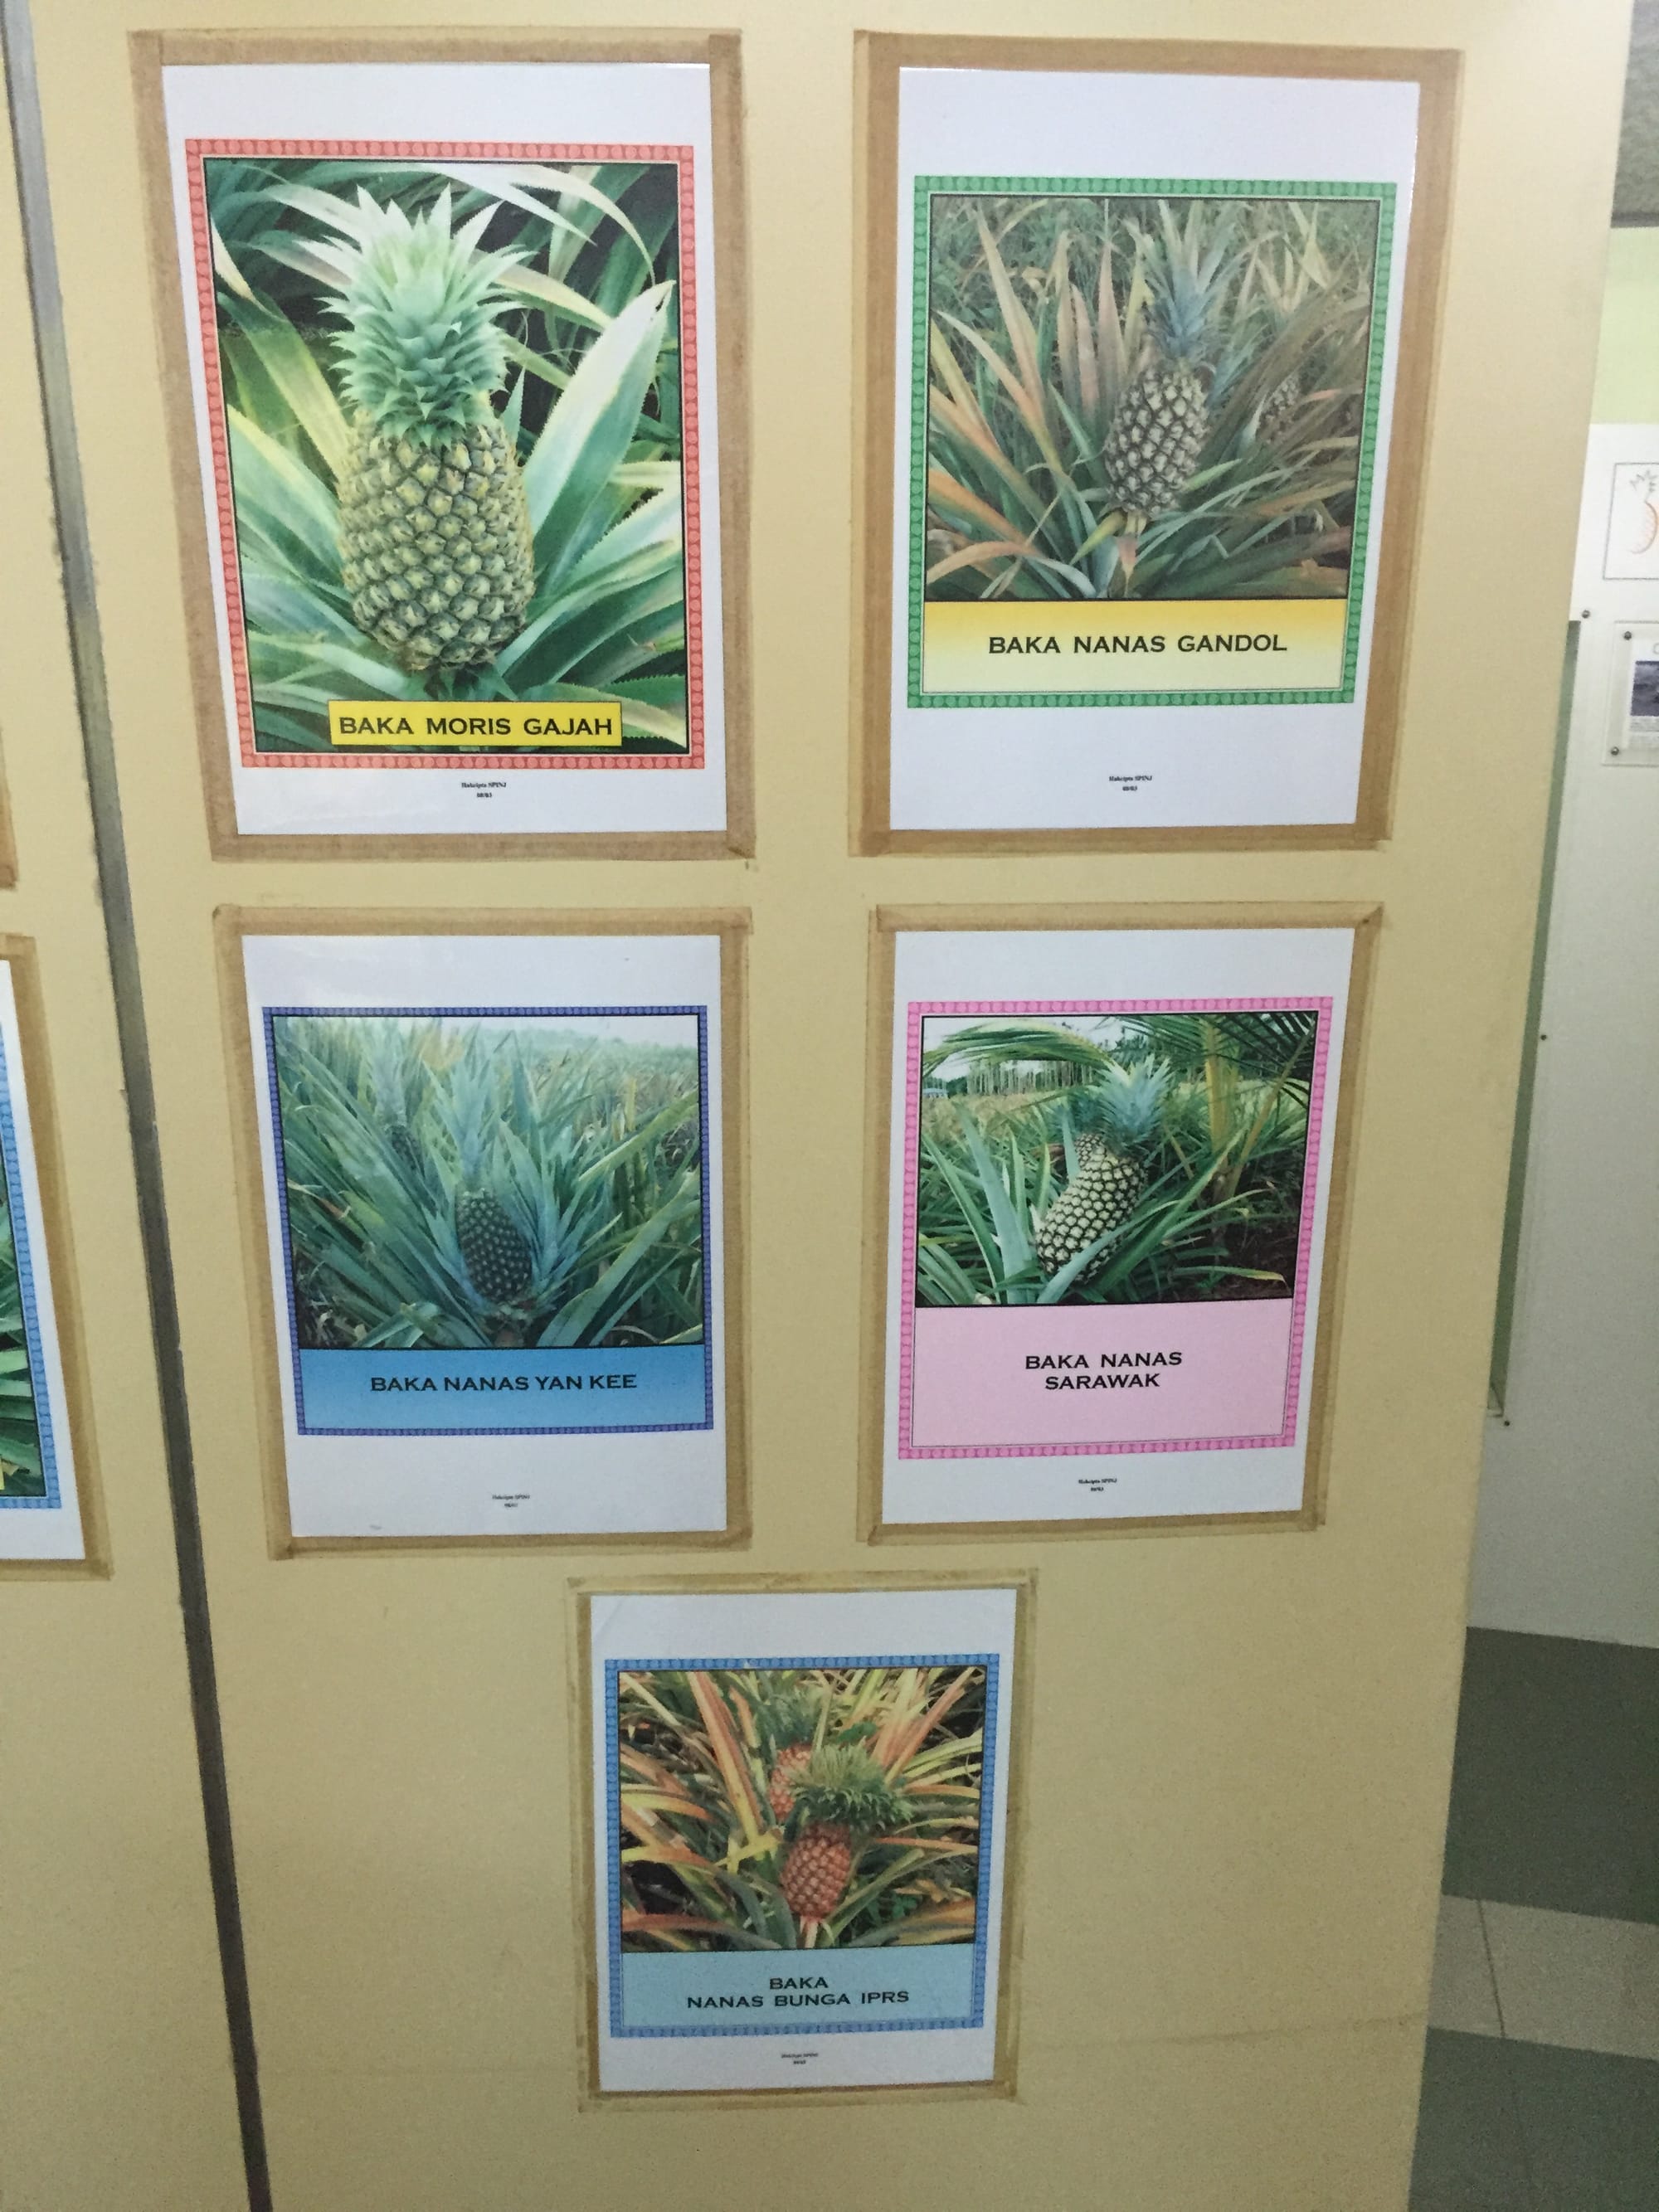 Photo by Author — different varieties of pineapple — Muzium Nanas (Pineapple Museum), Johor, Malaysia